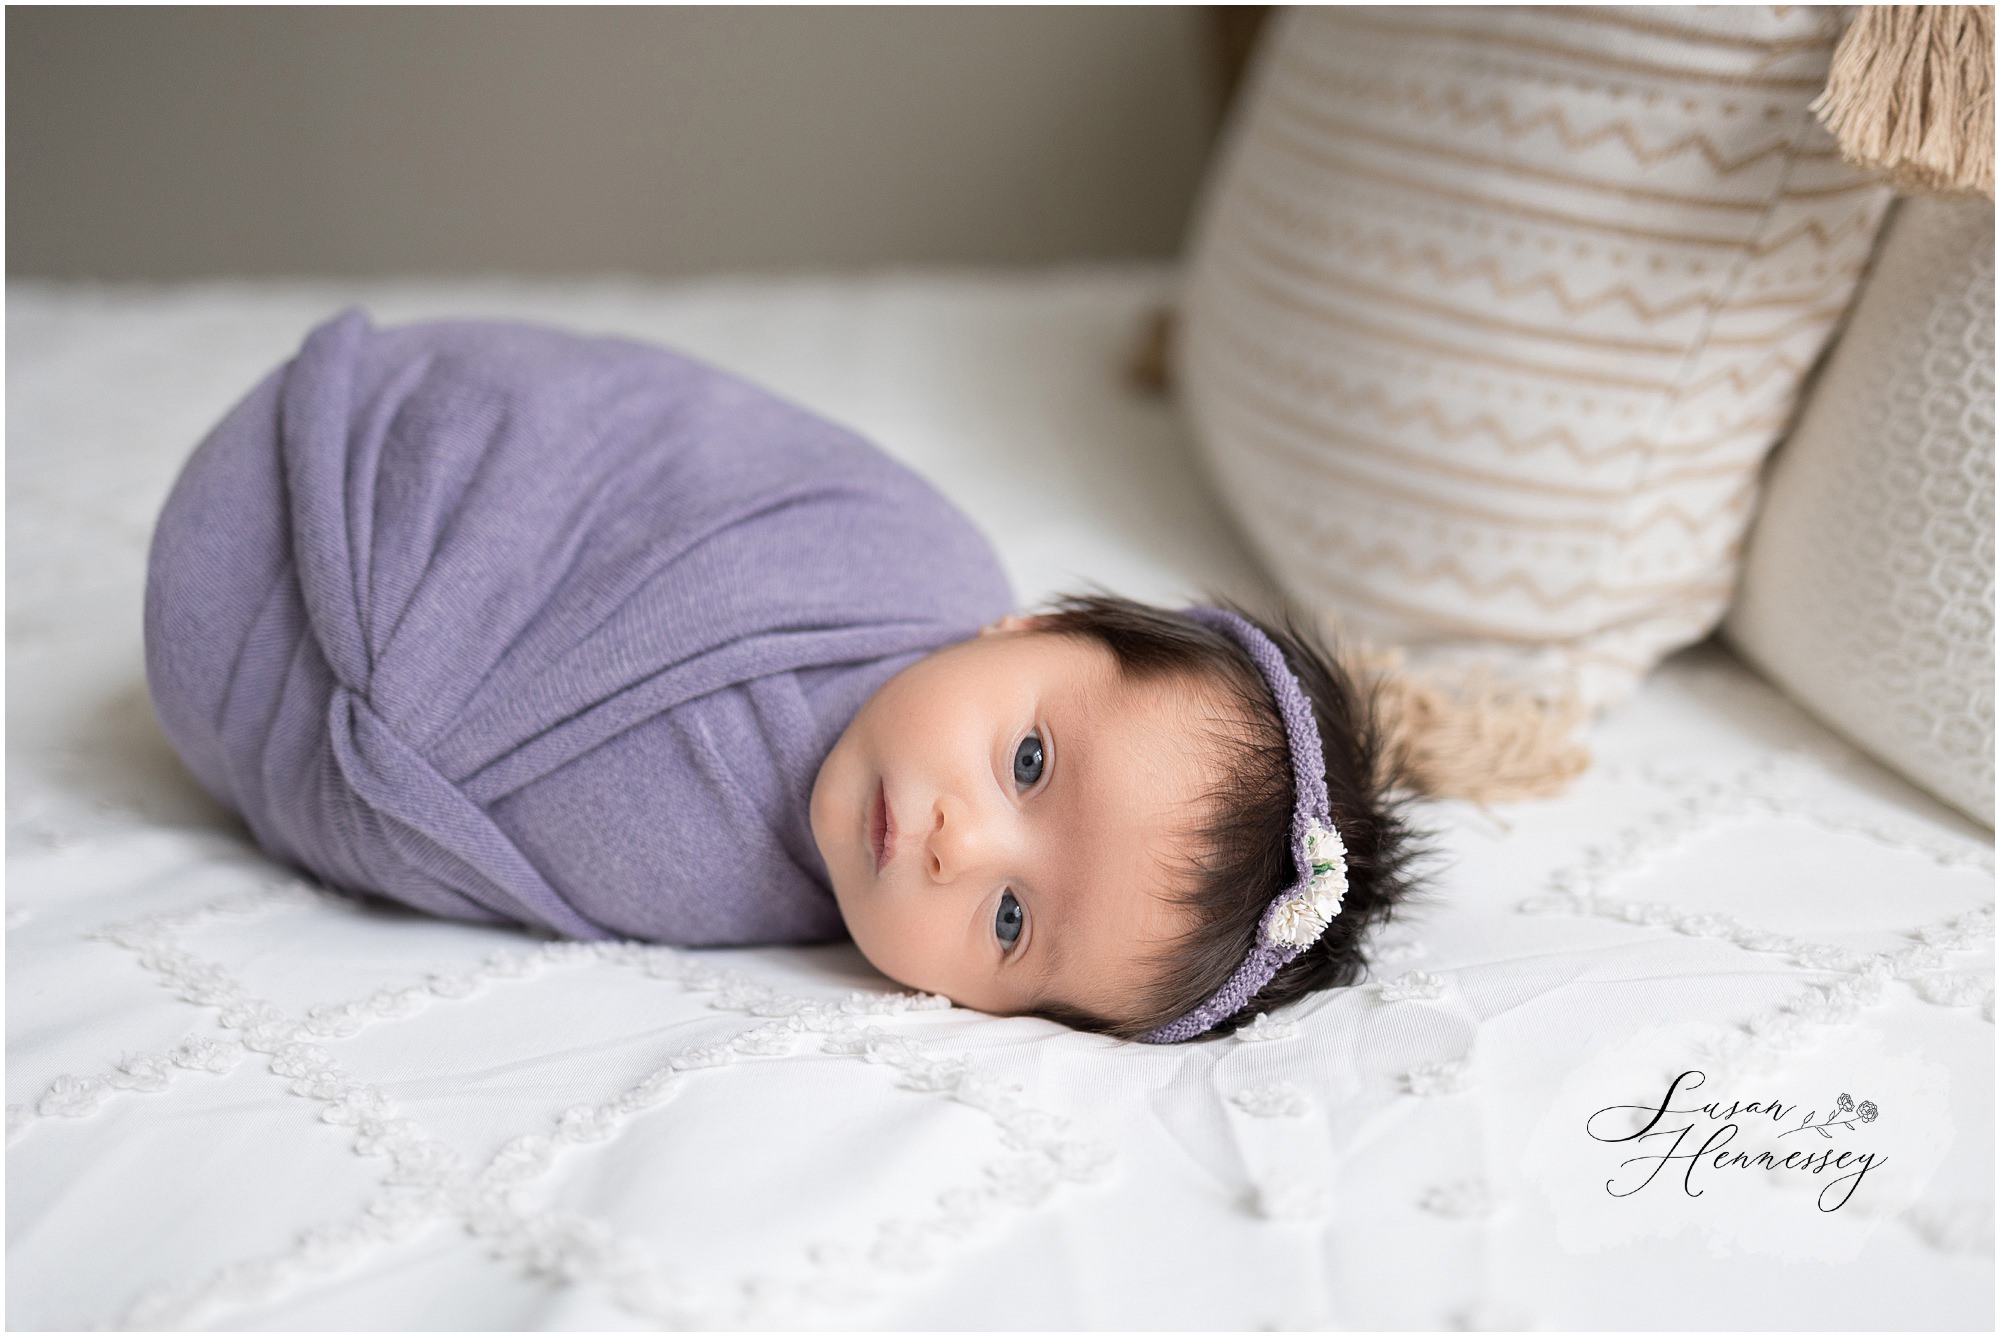 Lifestyle newborn photos taken in studio by Susan Hennessey Photography. 